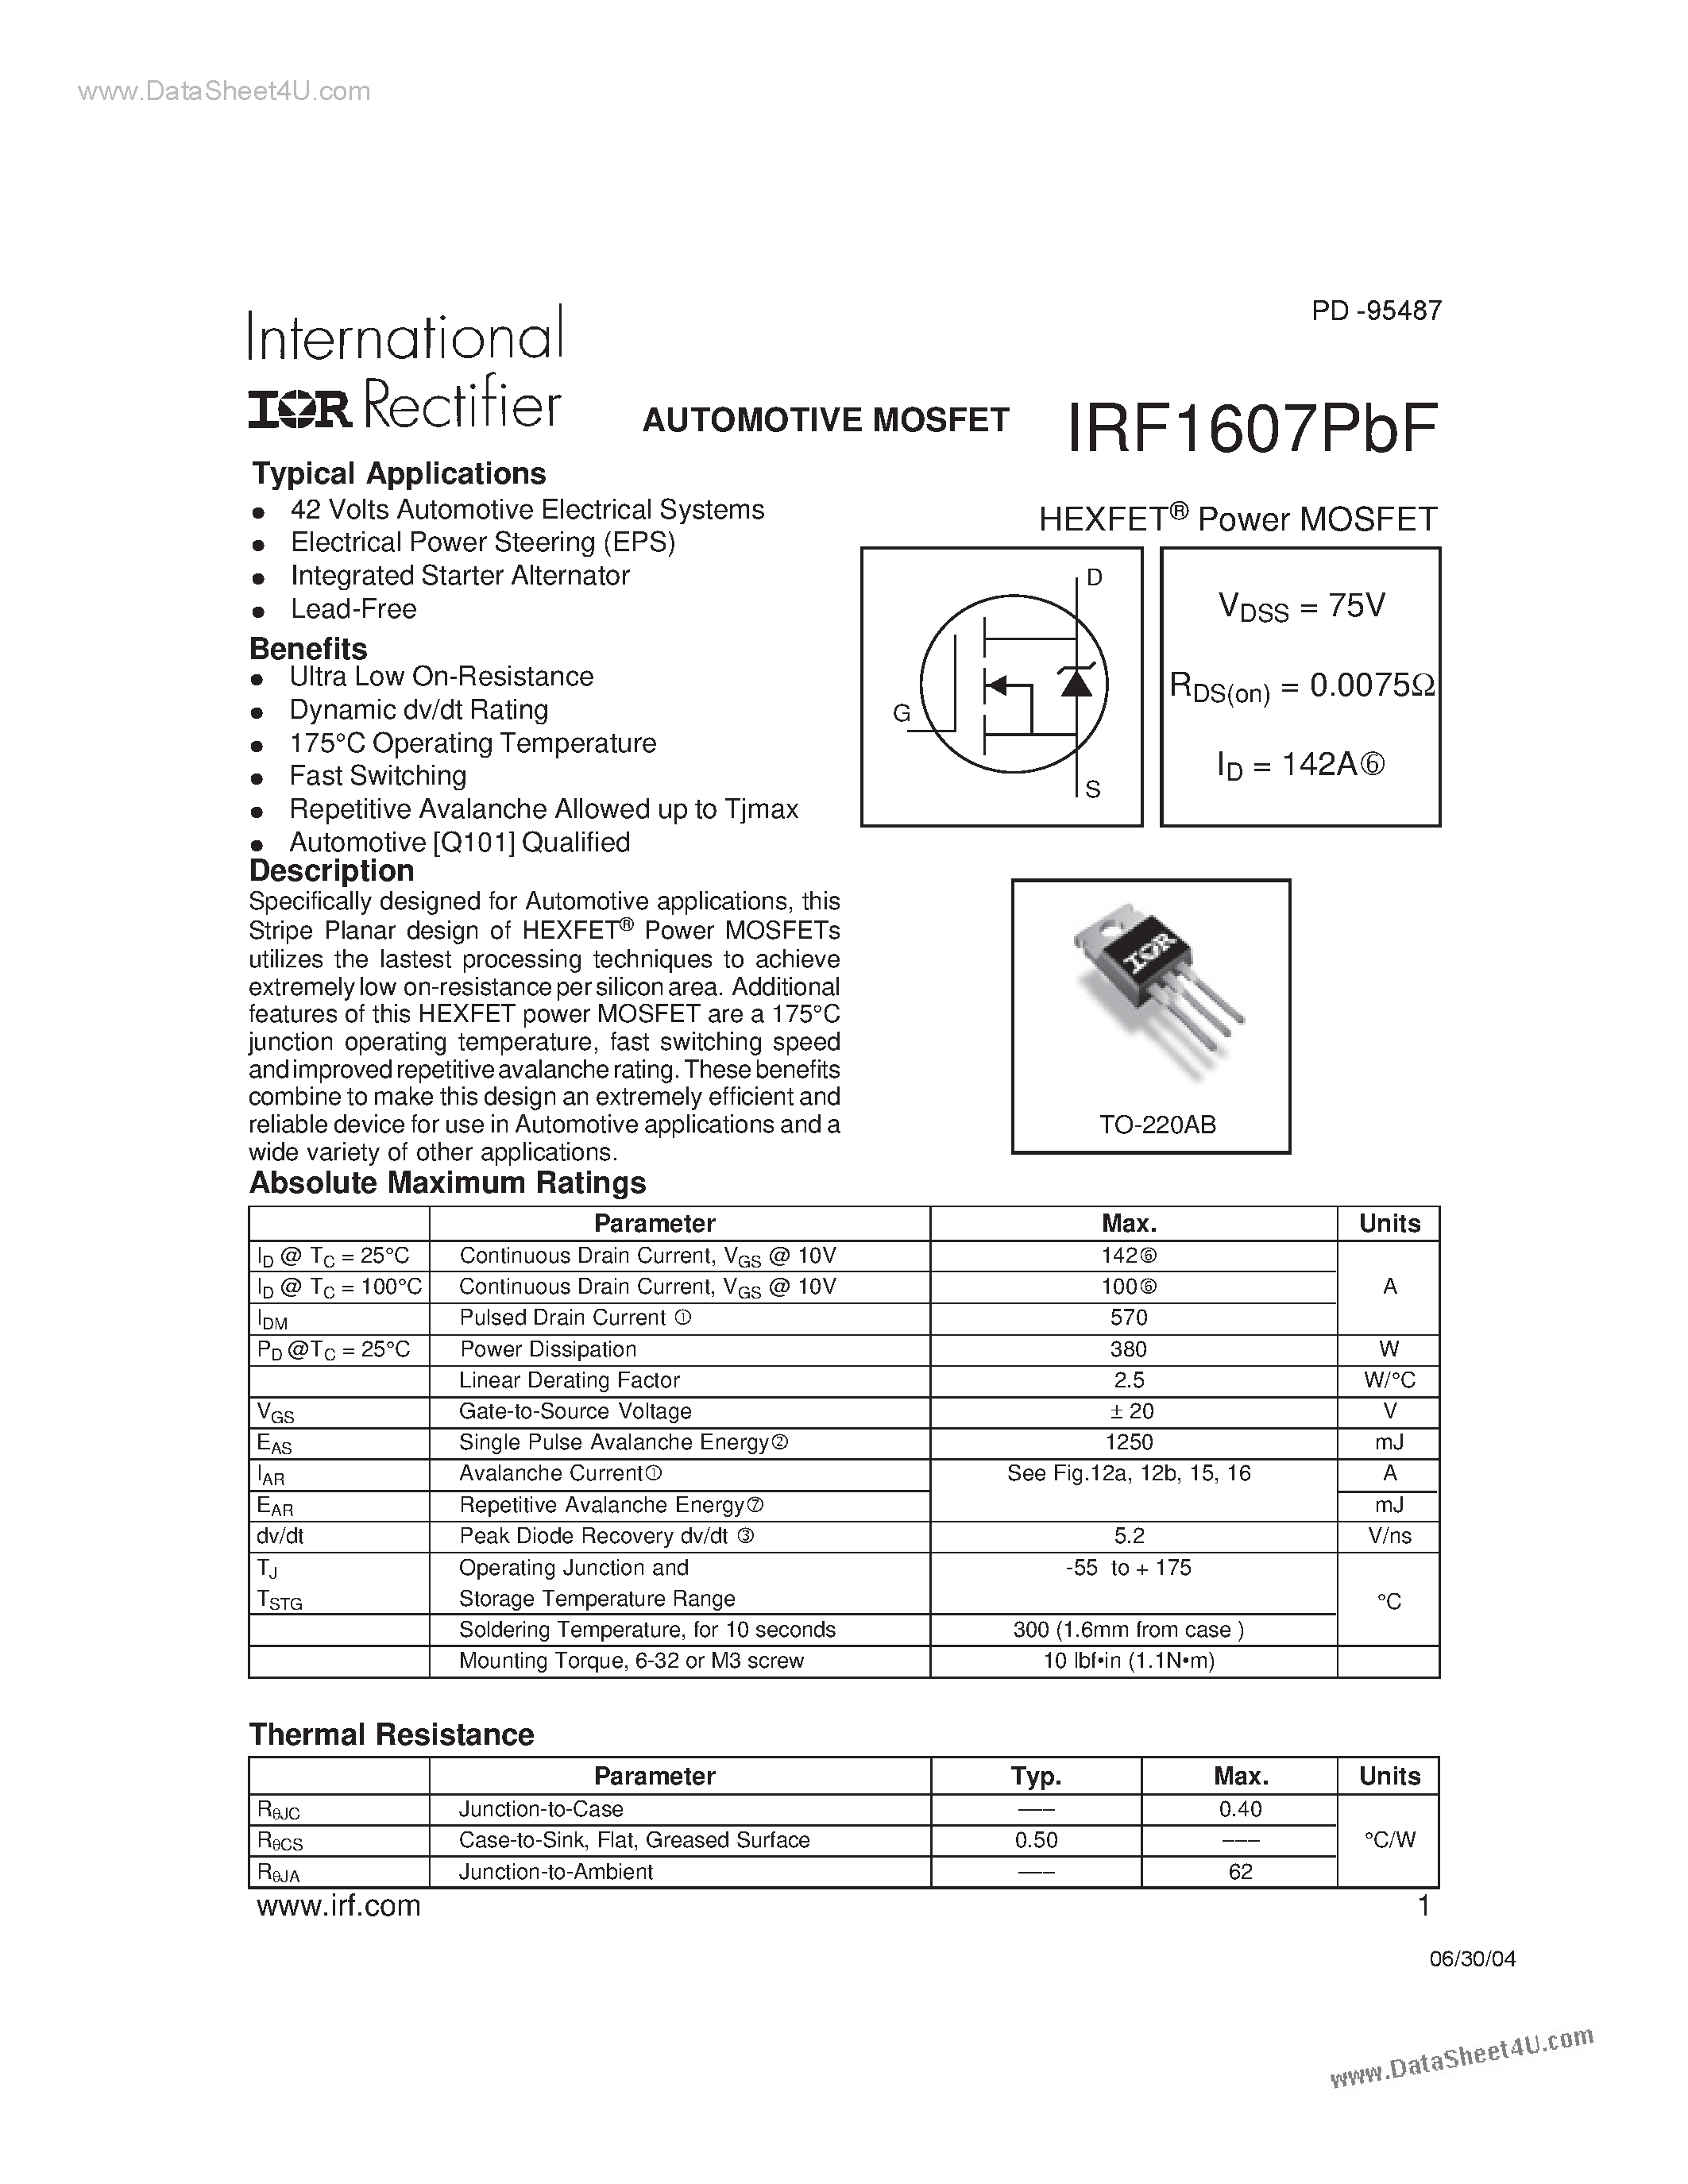 Даташит IRF1607PBF - AUTOMOTIVE MOSFET страница 1